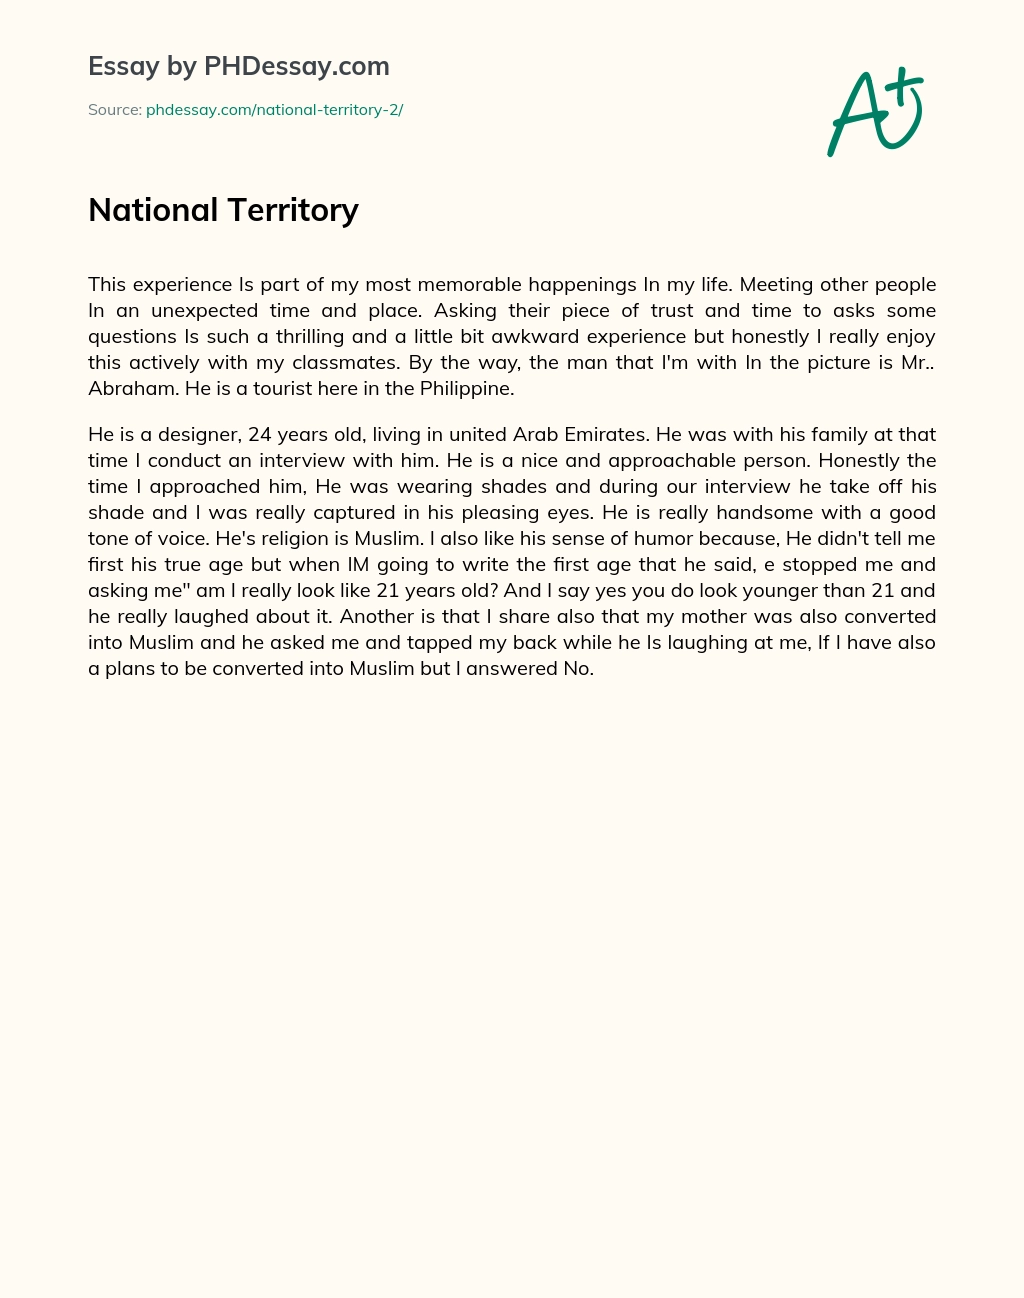 National Territory essay